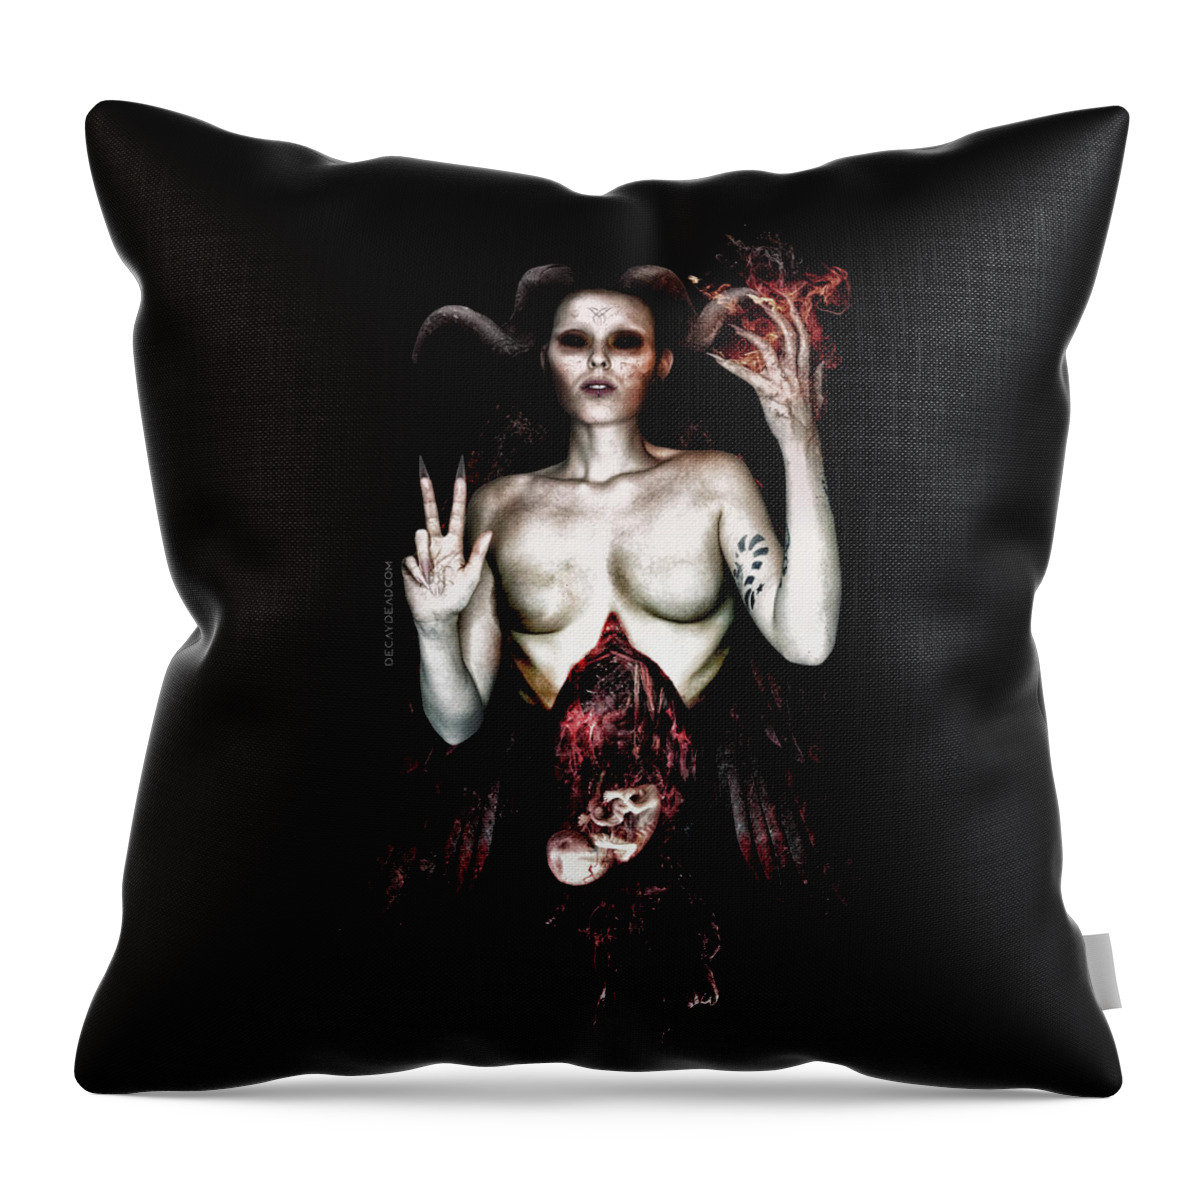 Dark Art Throw Pillow featuring the digital art The Birth of the Chosen One by Argus Dorian